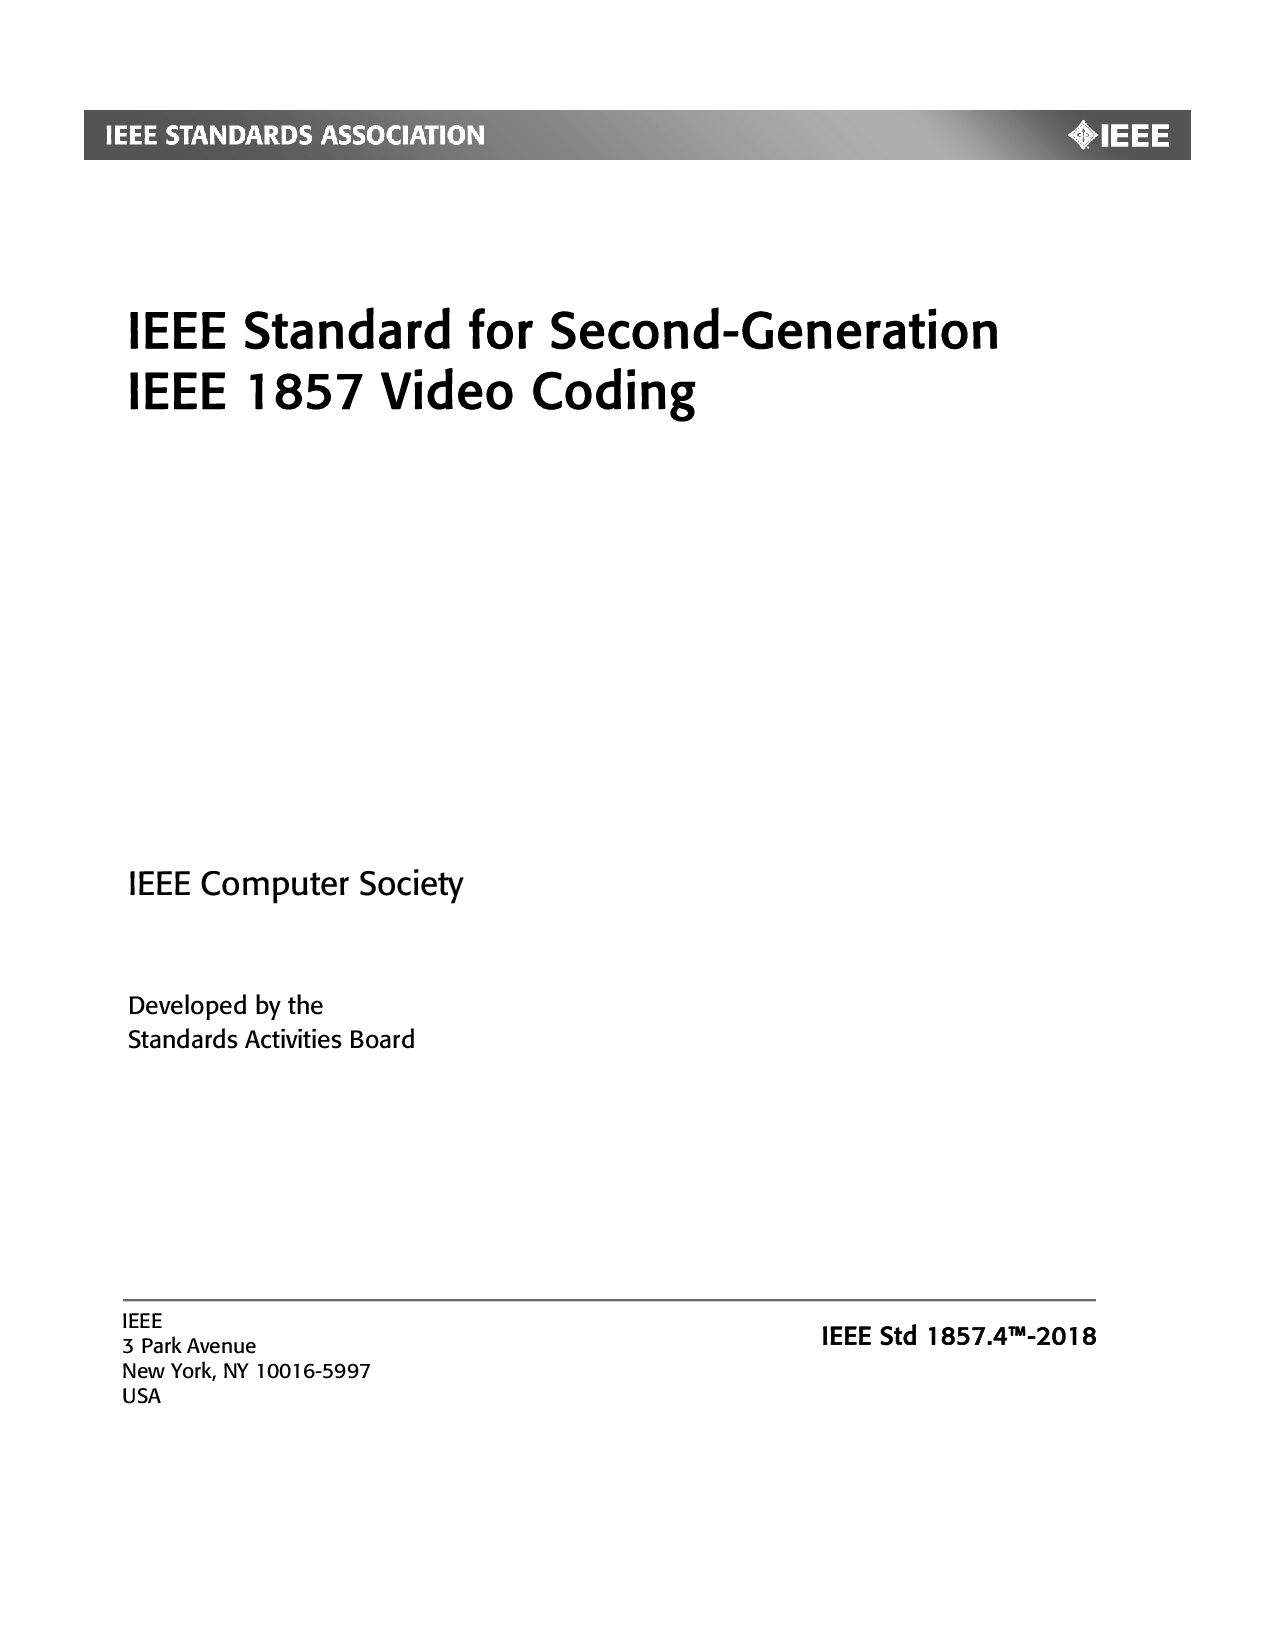 IEEE Std 1857.4-2018